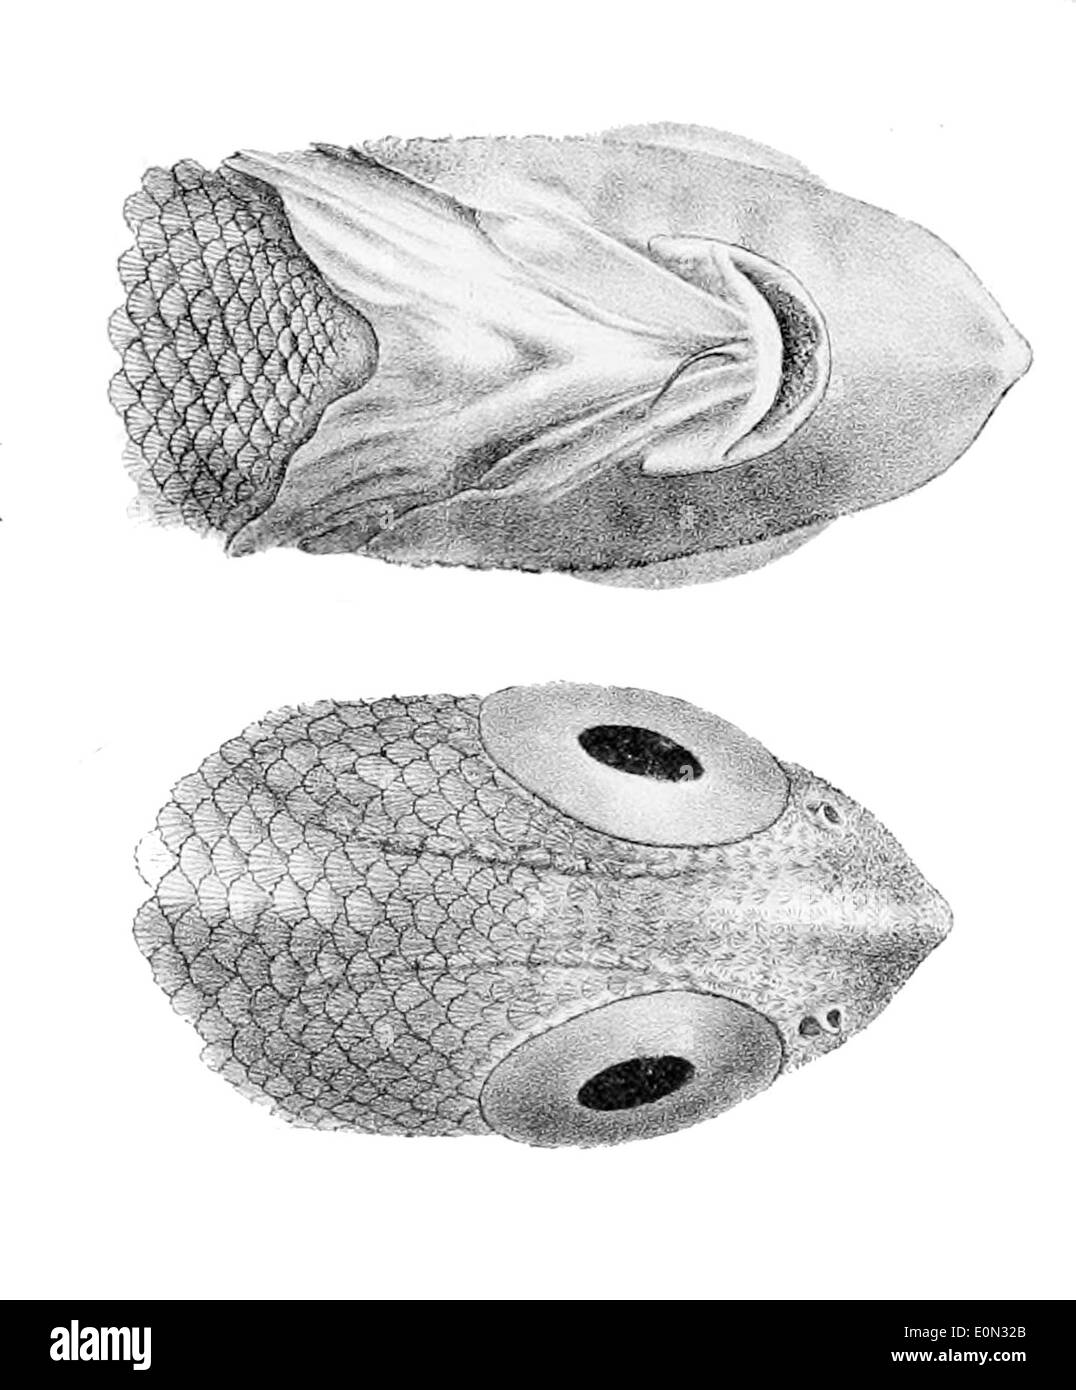 Coelorinchus fasciatus Stockfoto